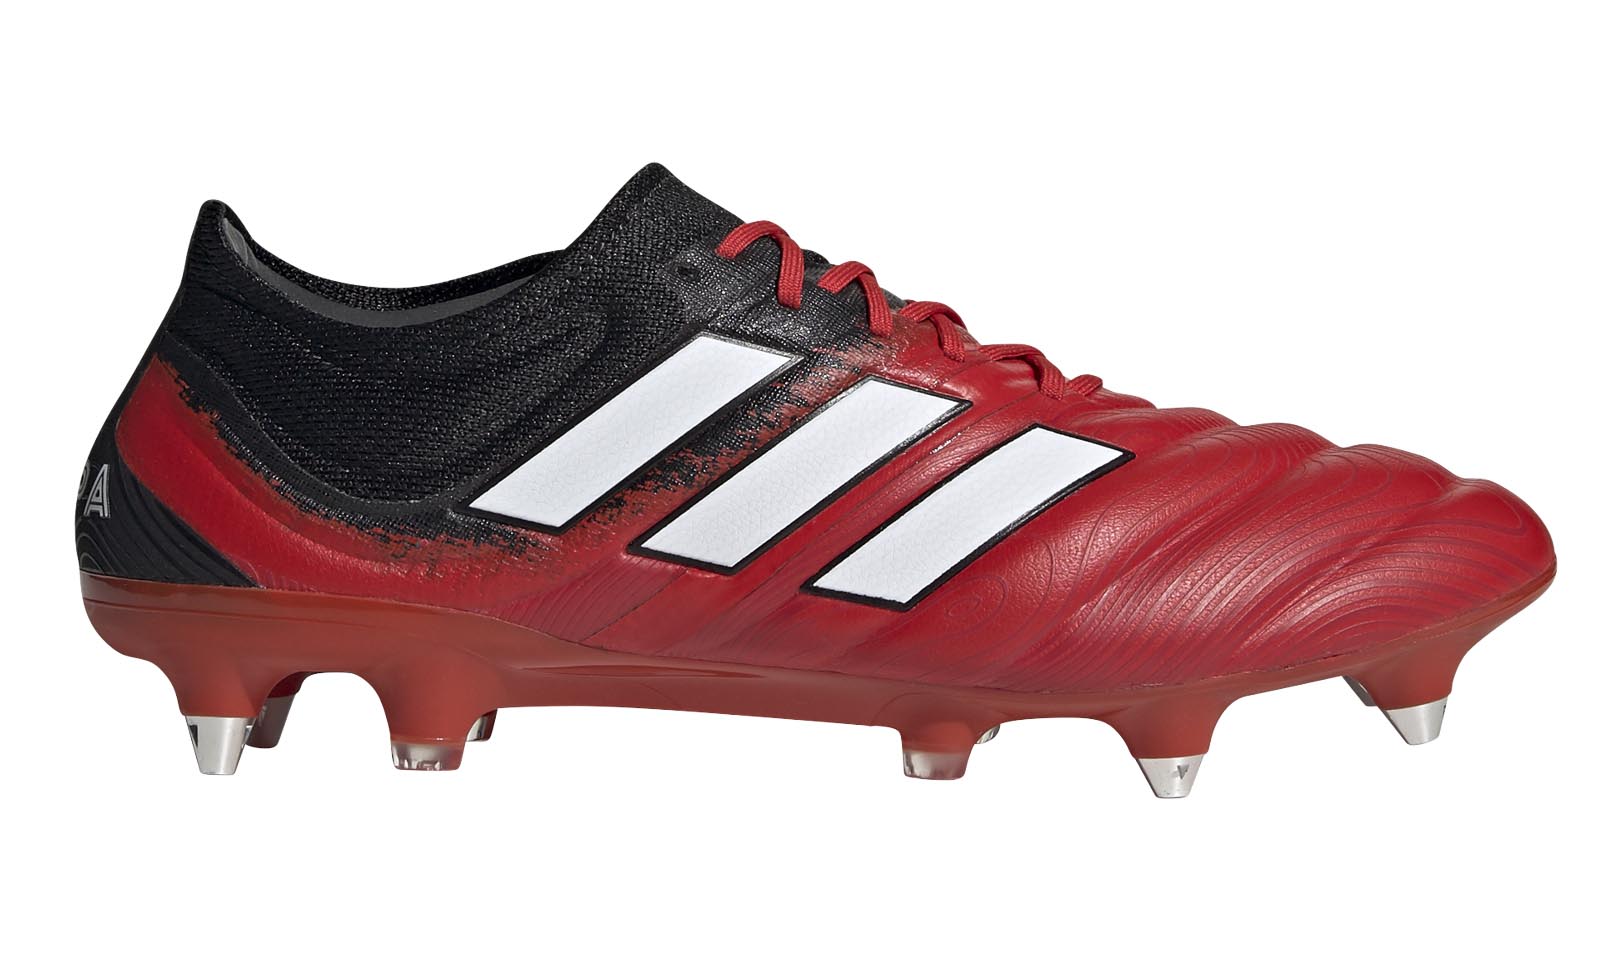 Botas de fútbol Adidas Copa 20.1 SG Mutador Pack colore rojo negro - Adidas